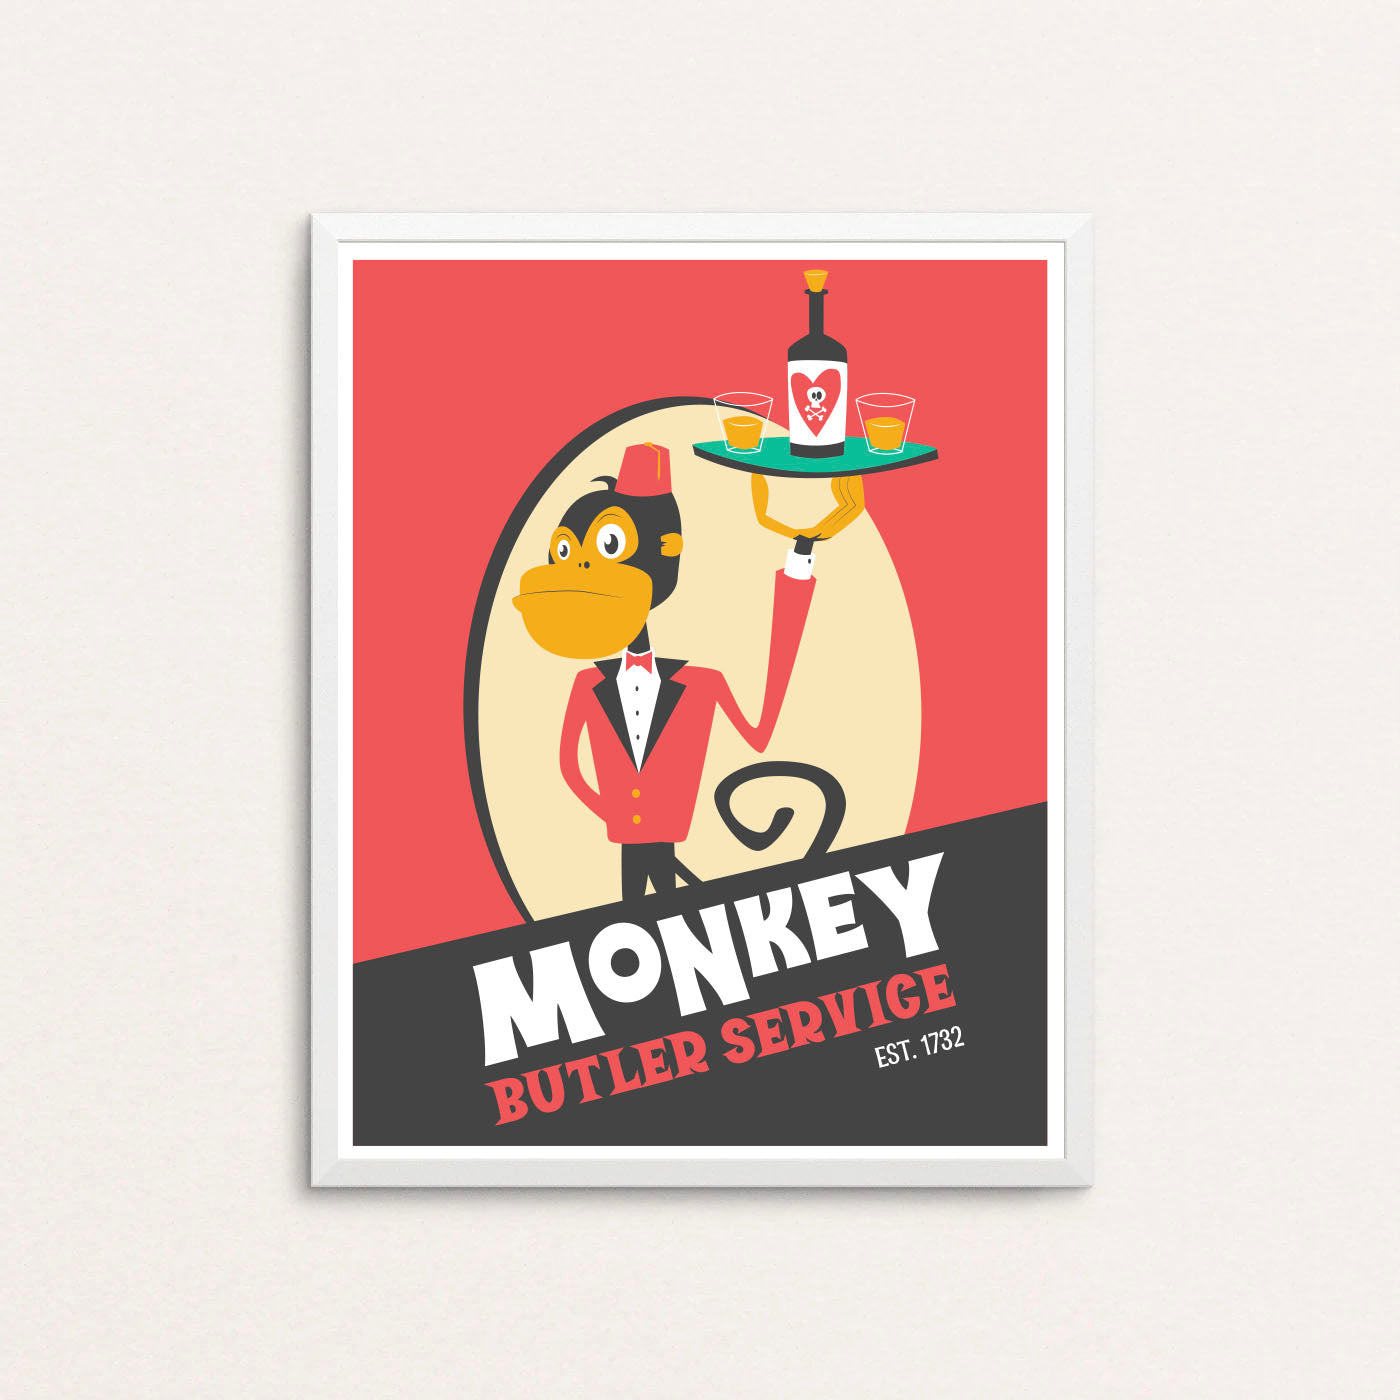 Monkey Butler Service Poster